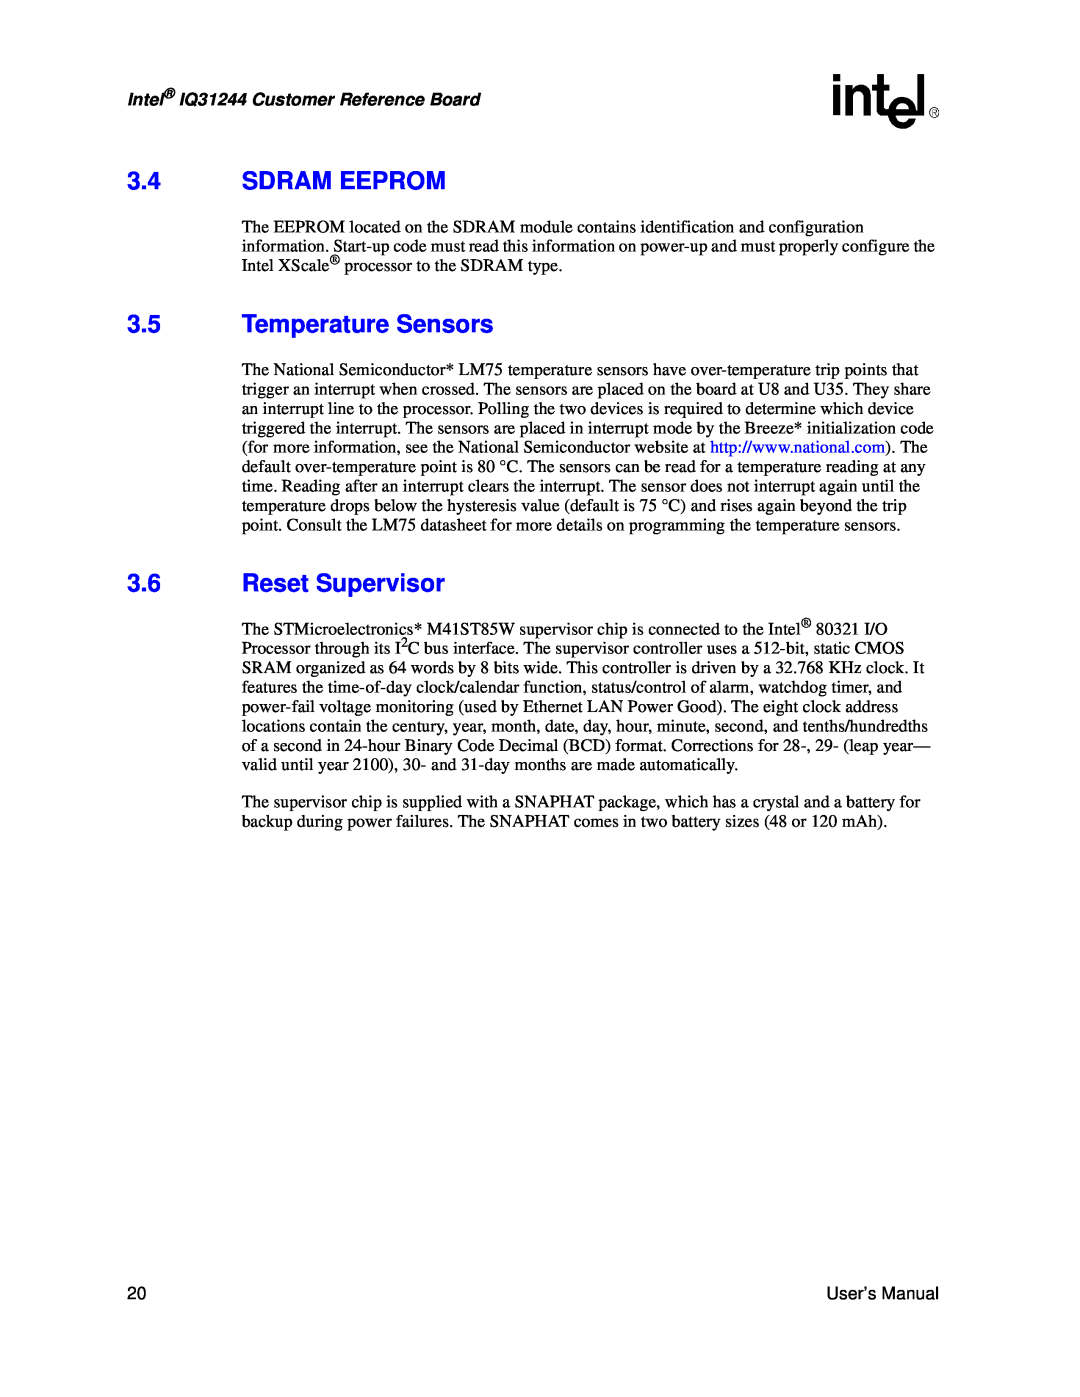 Intel user manual 3.4SDRAM EEPROM, 3.5Temperature Sensors, 3.6Reset Supervisor, Intel IQ31244 Customer Reference Board 